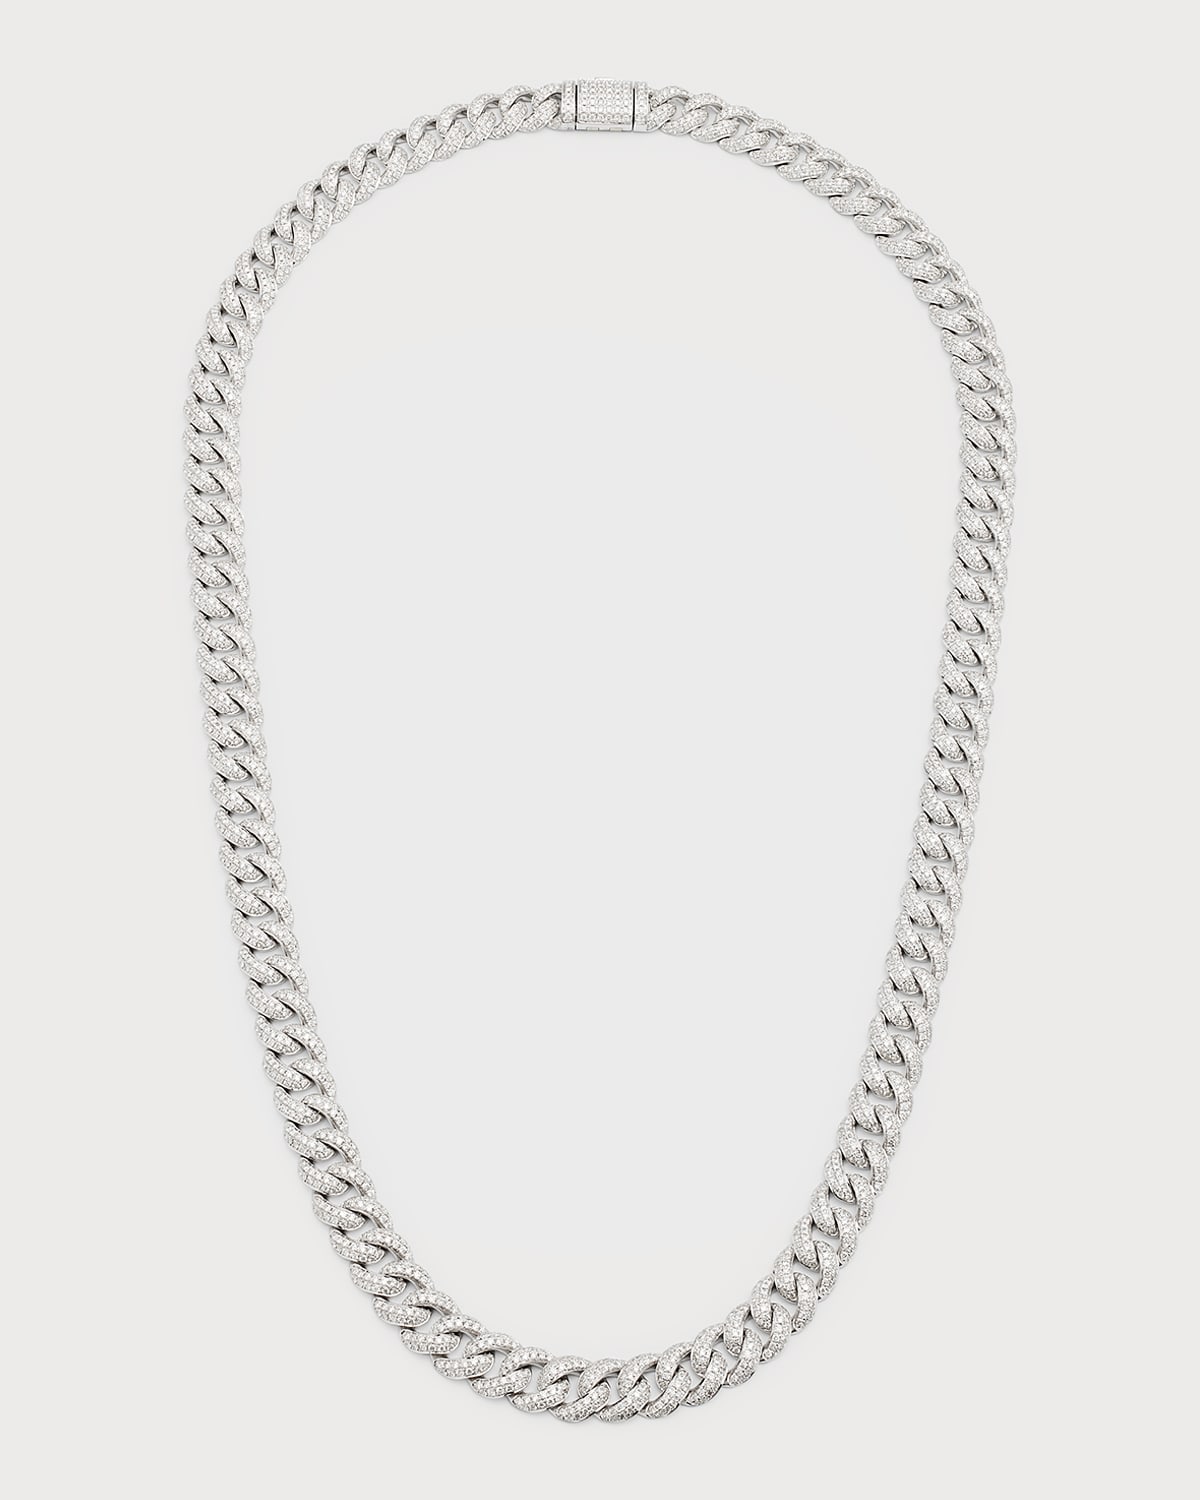 14K White Gold Pave Diamond Curb Chain Necklace, 22"L